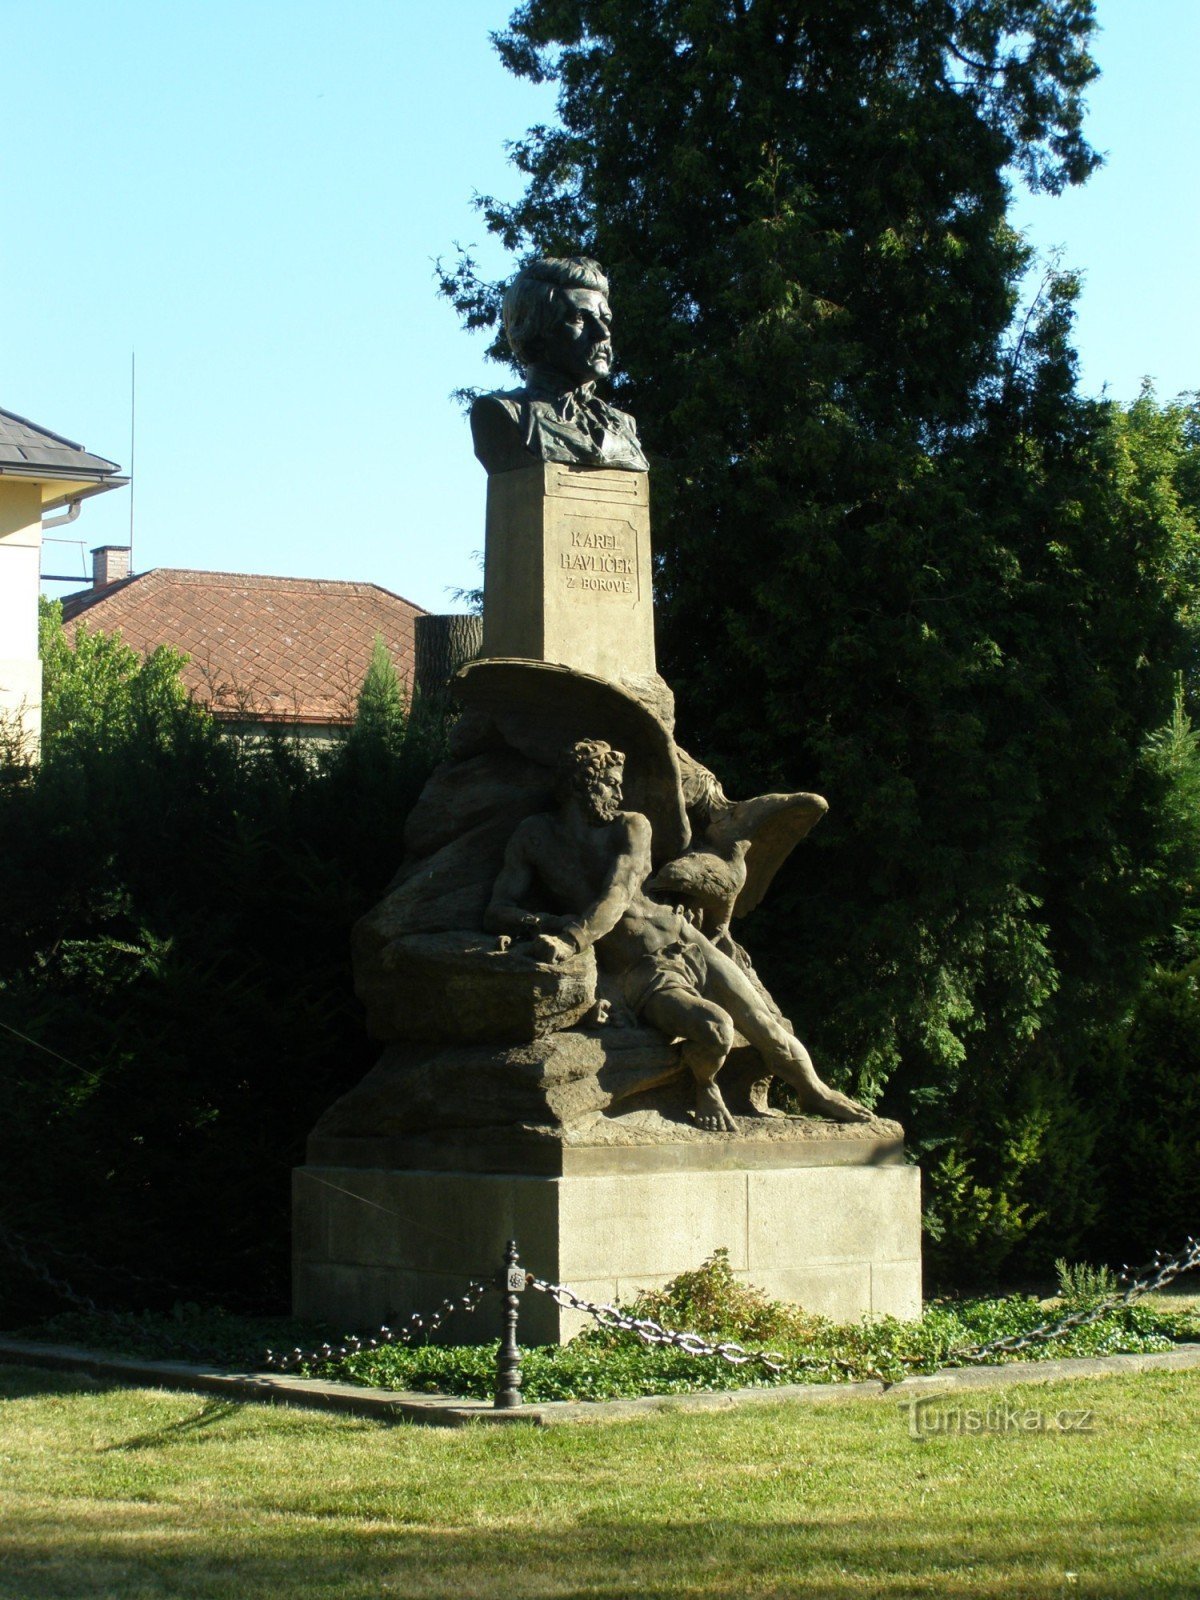 Jičín - Prometheuksen patsas KHBorovskyn rintakuvalla